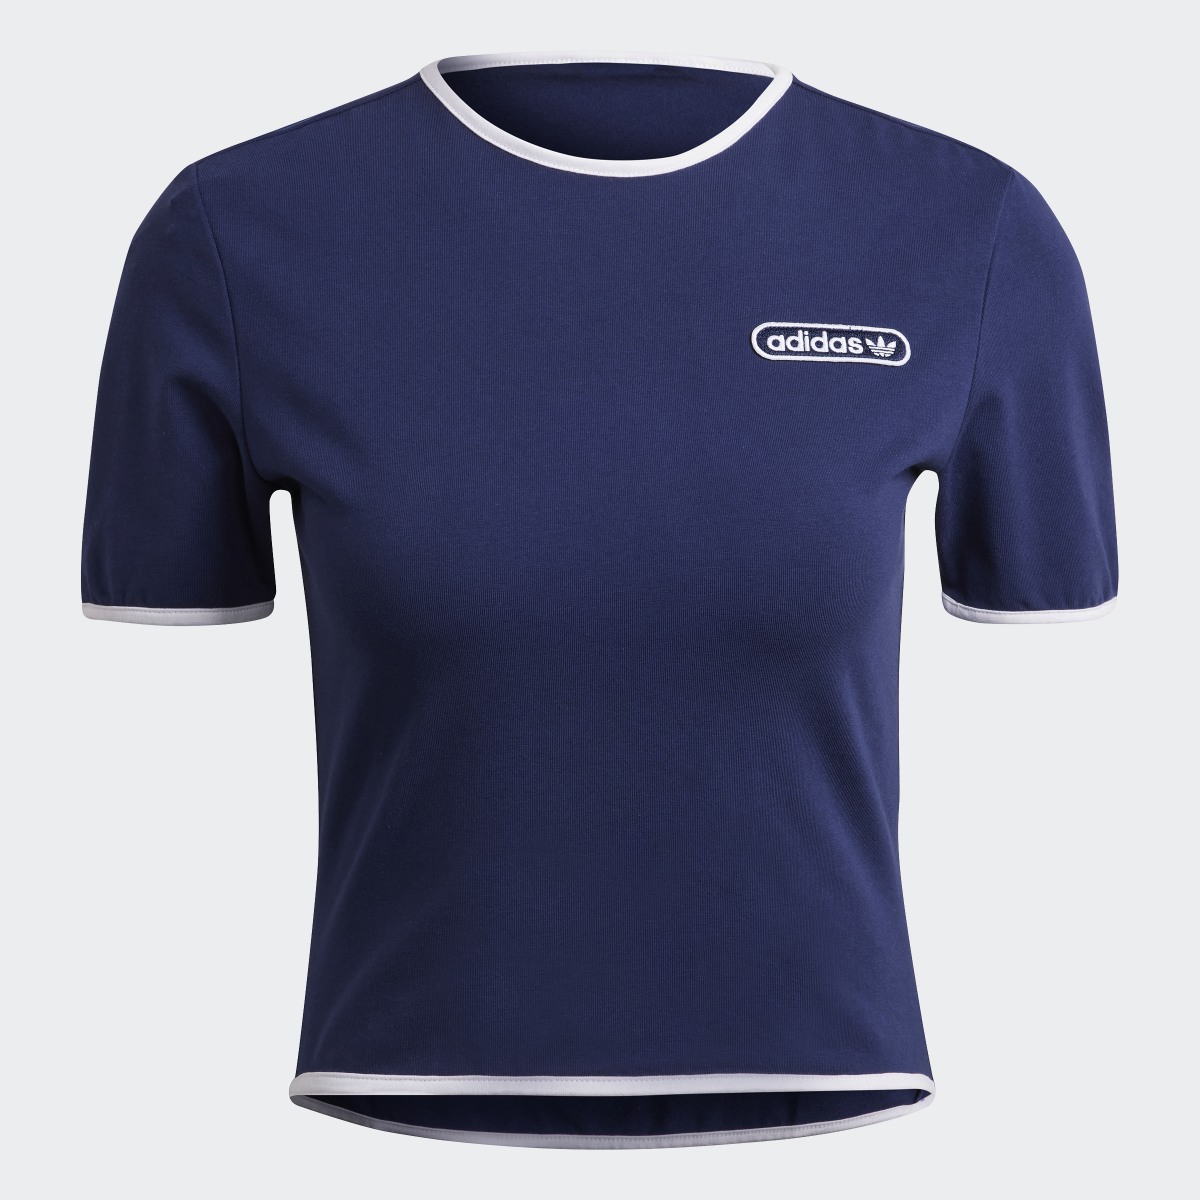 Adidas Binding Details Crop T-Shirt. 5